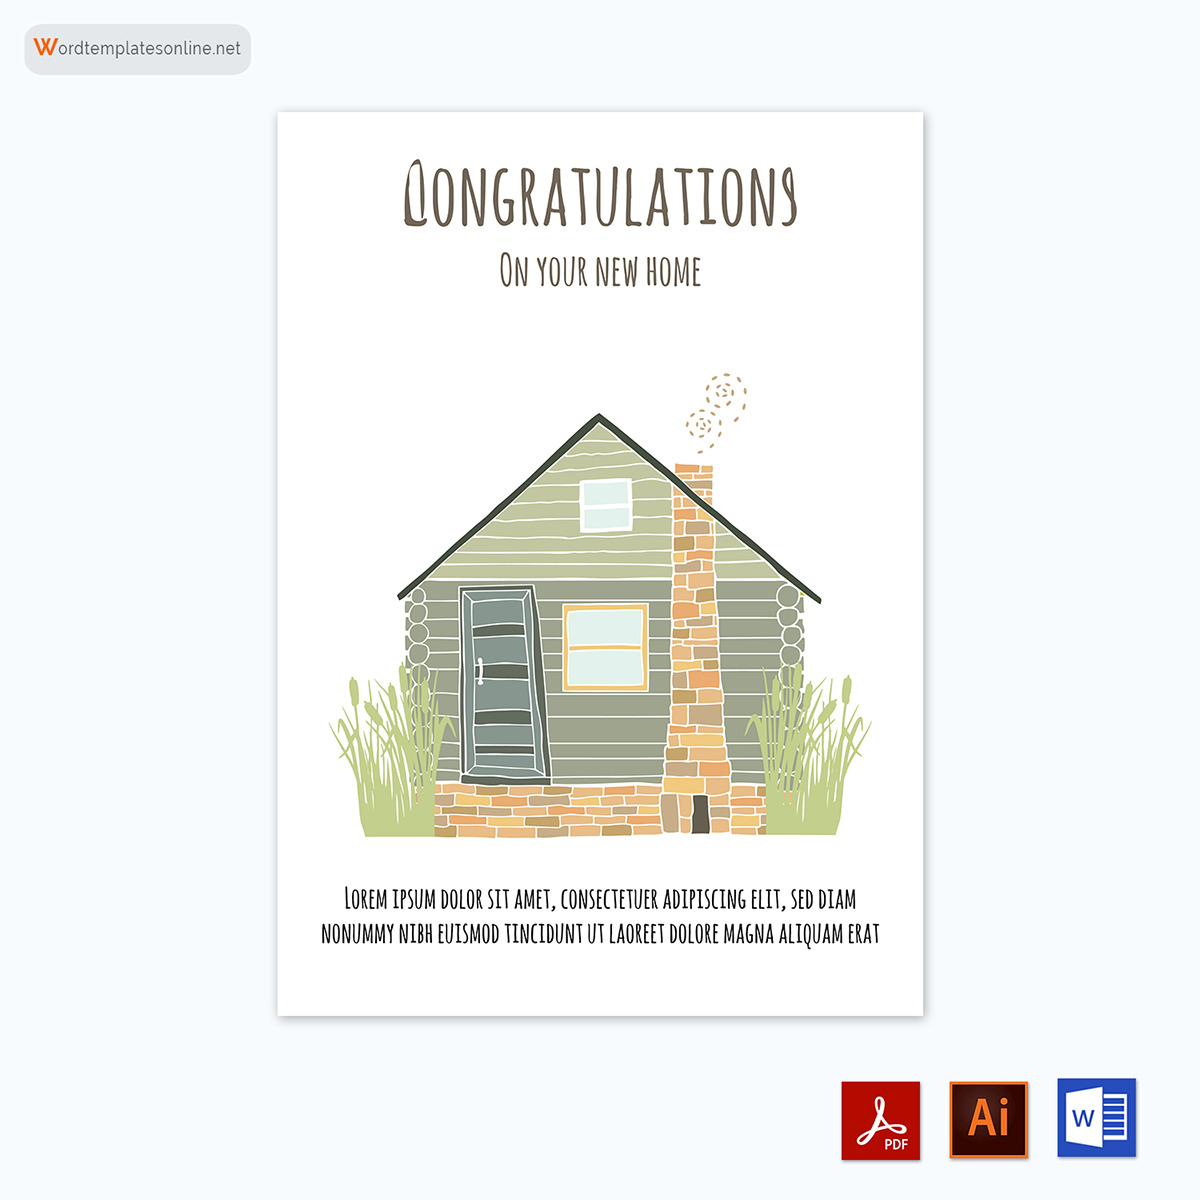 "Congratulations card template with Adobe Illustrator"